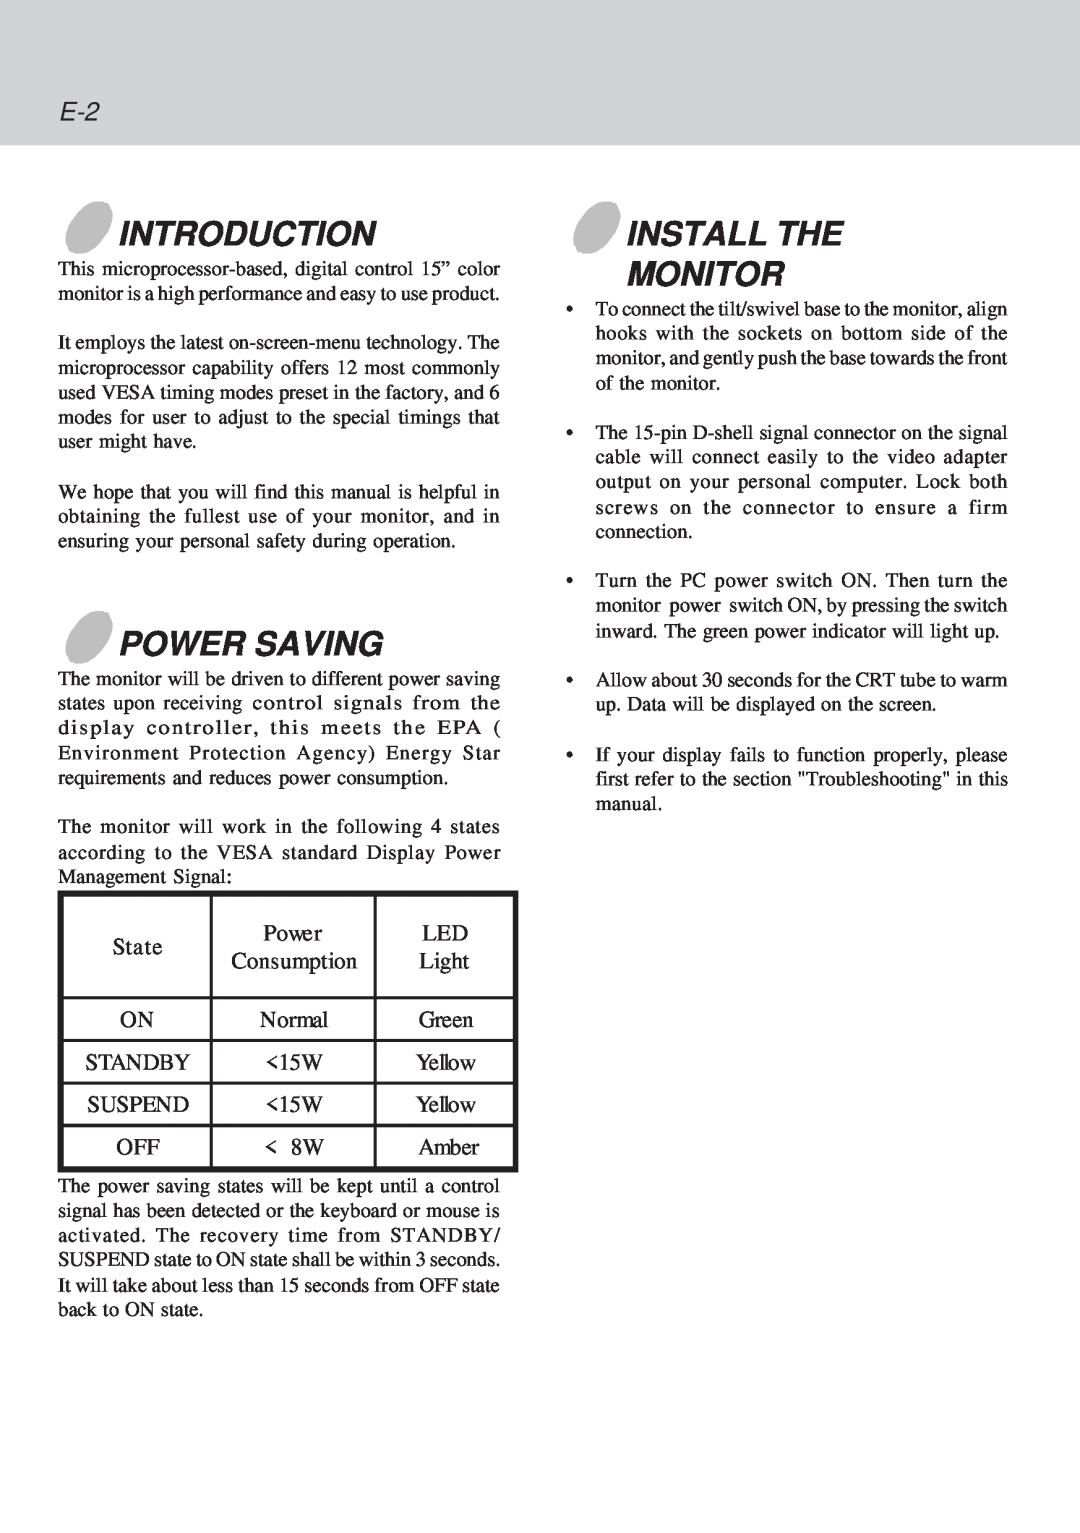 Lenovo C51 manual Introduction, Power Saving, Install The Monitor 